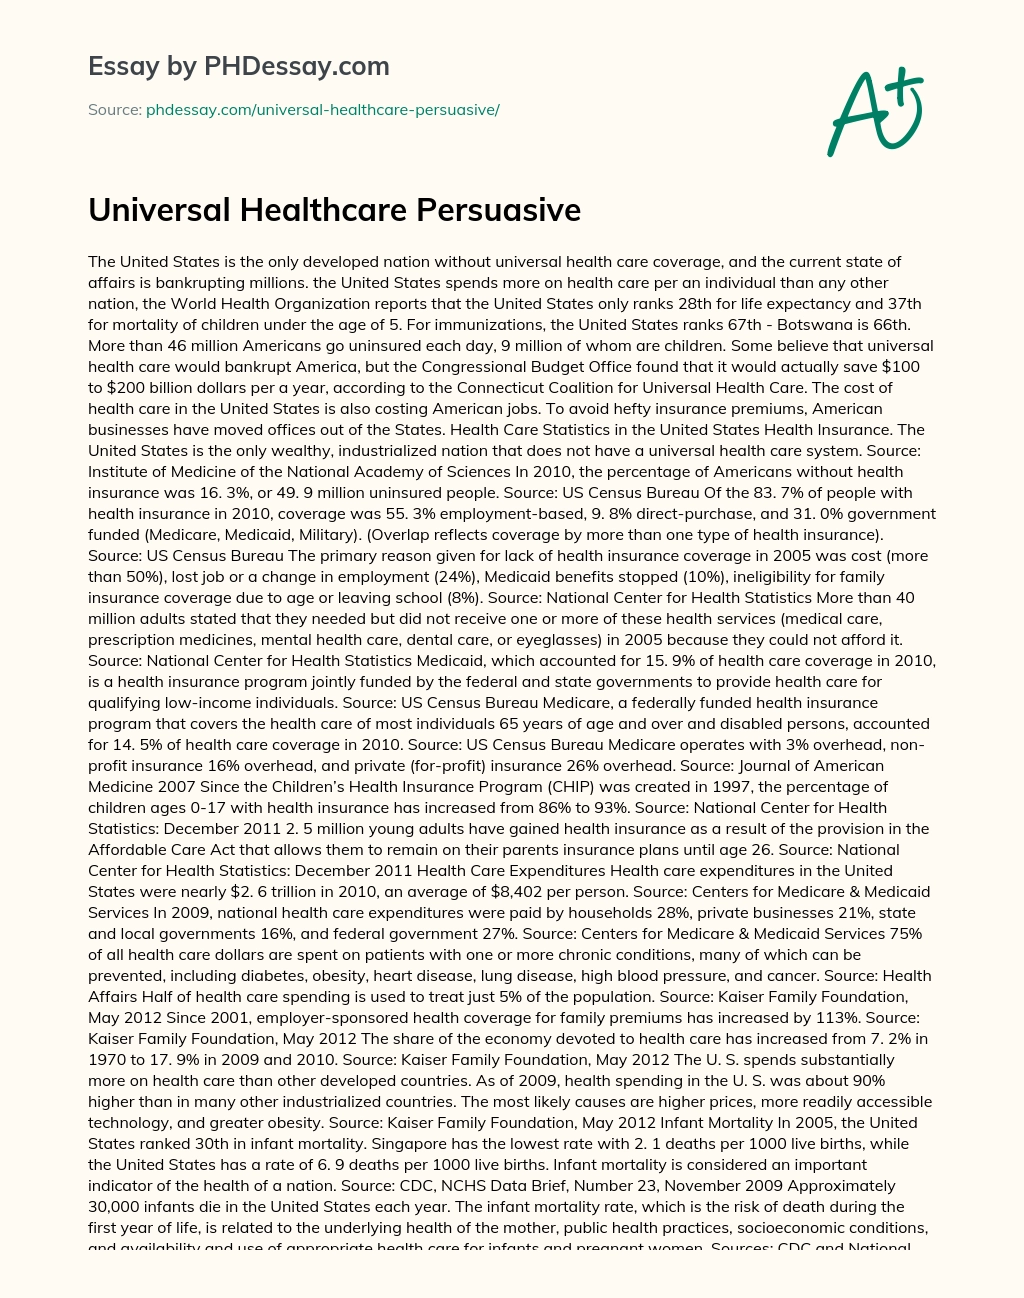 pro universal health care essay